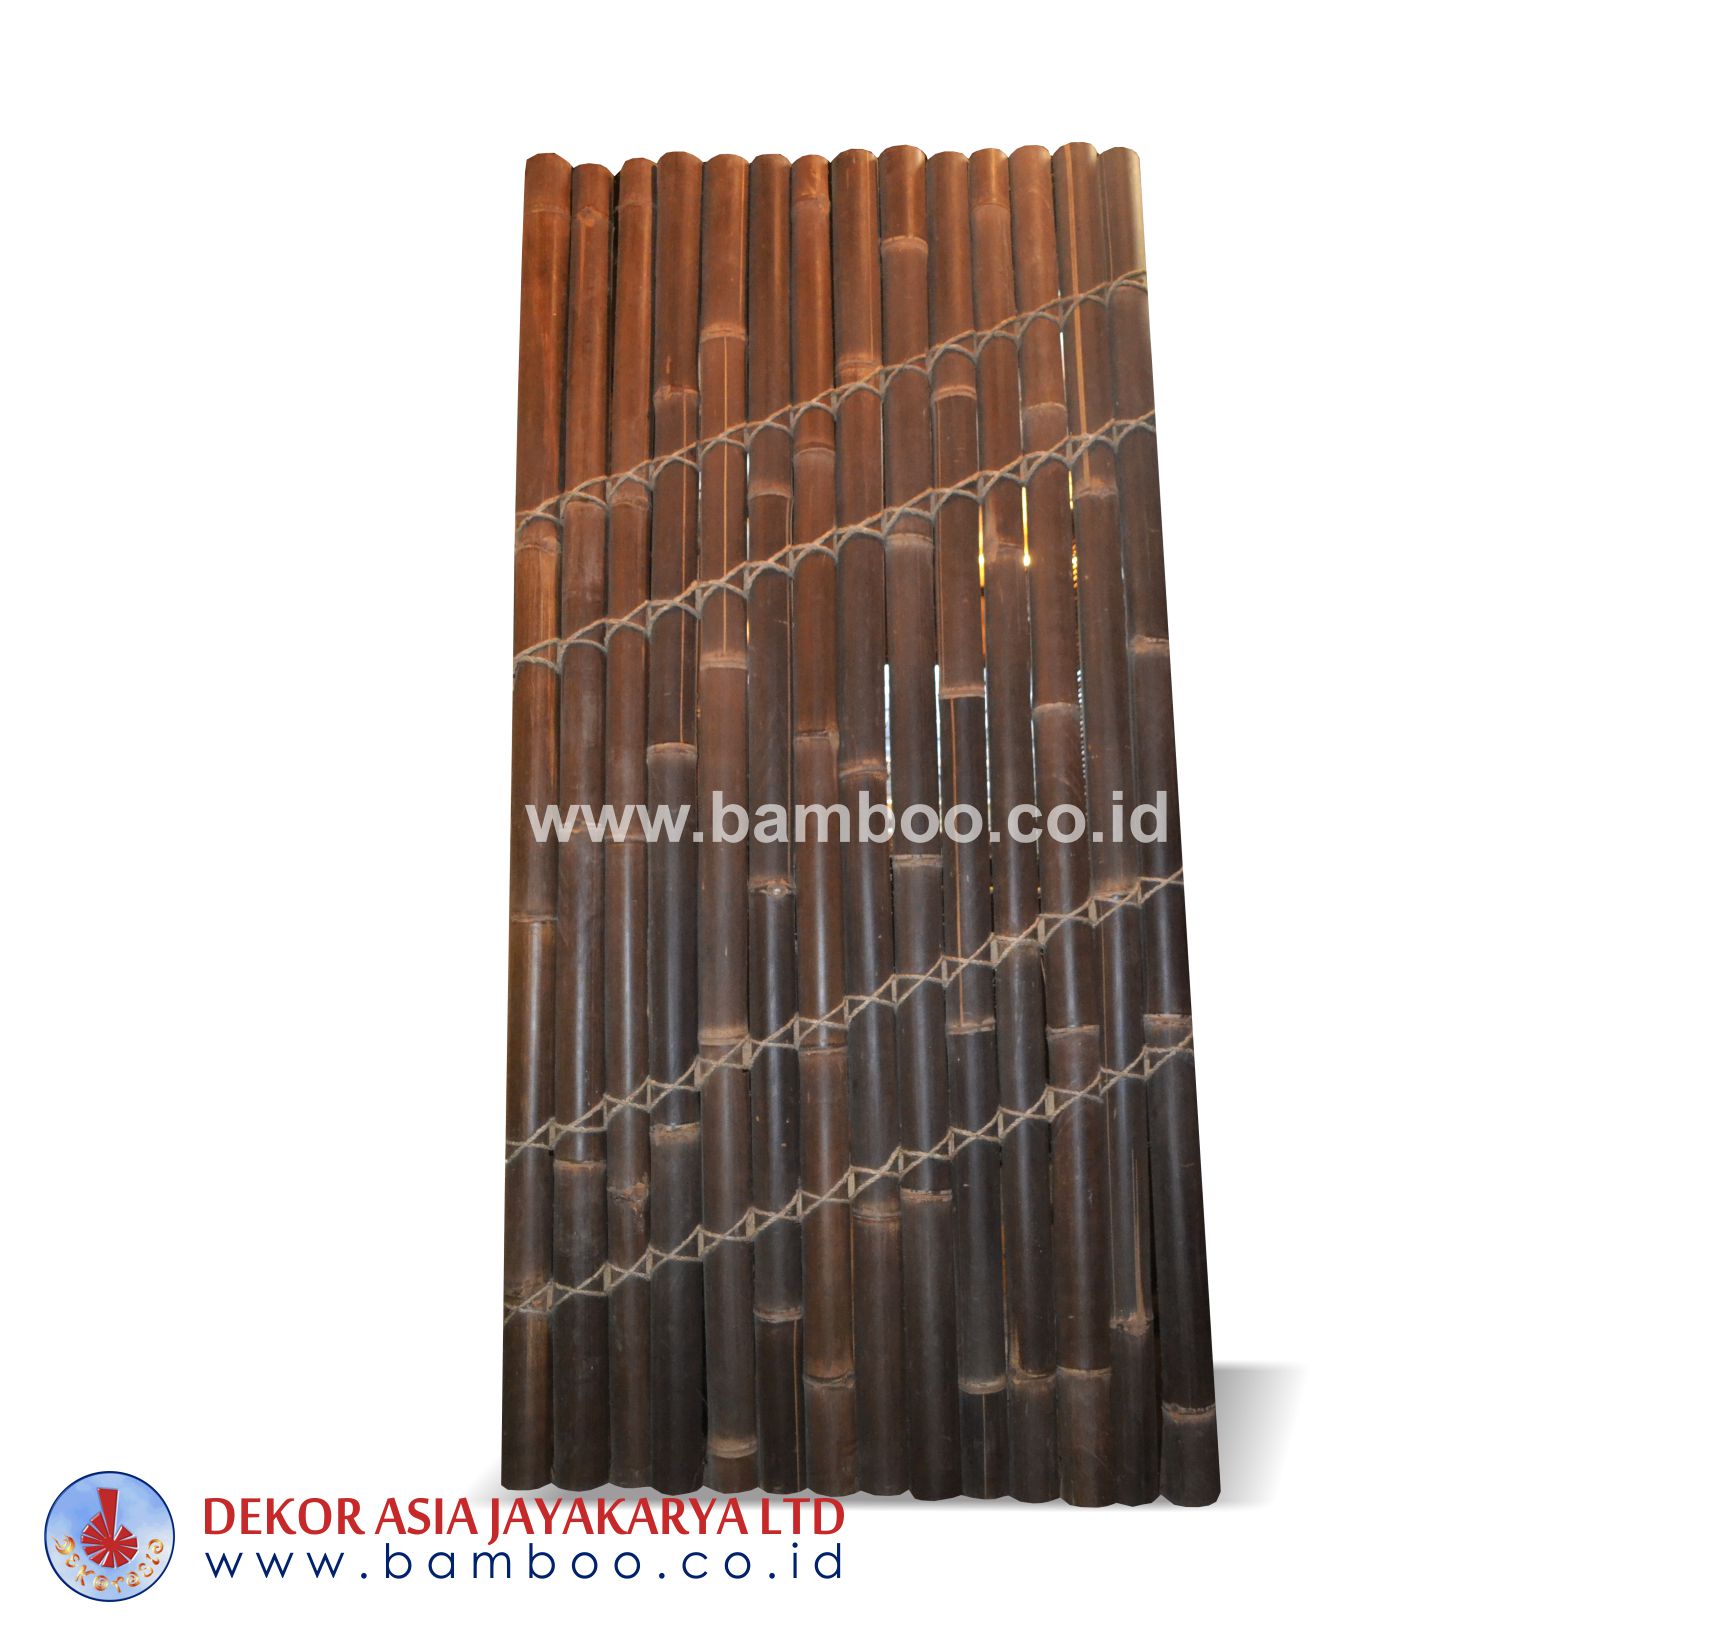 Half cut bamboo fence 4 back slats black coco rope